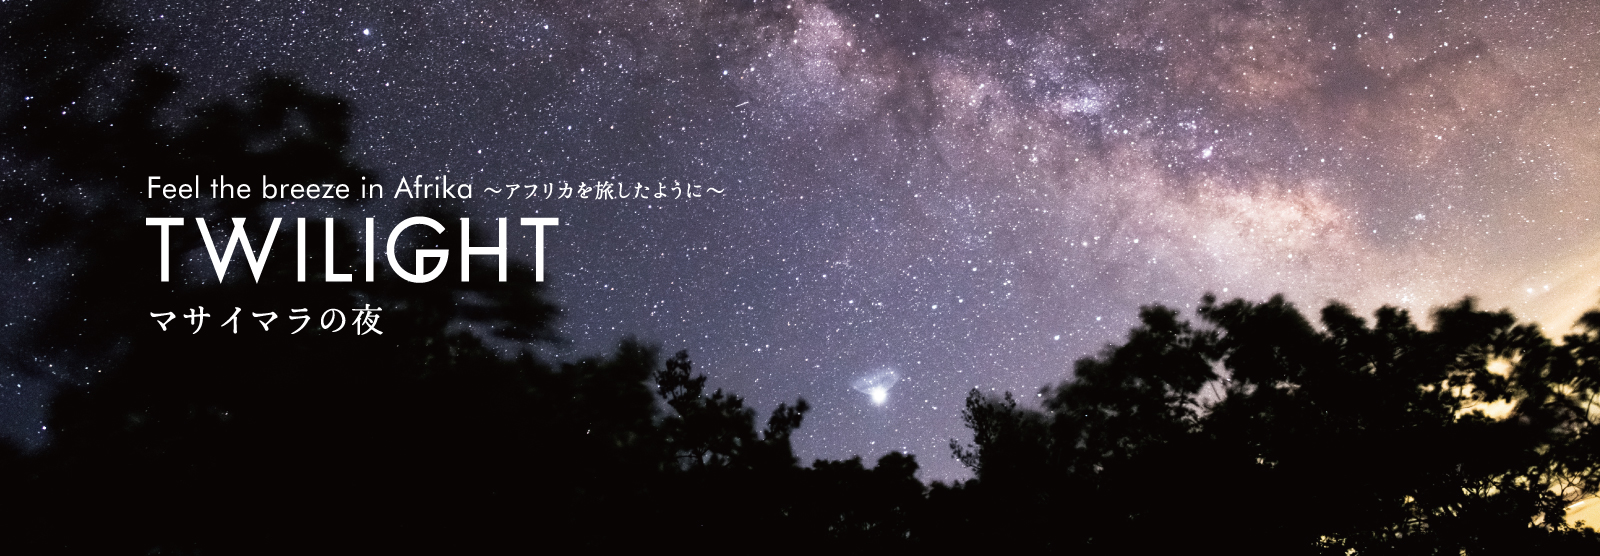 TWILIGHT〜マサイマラの夜〜